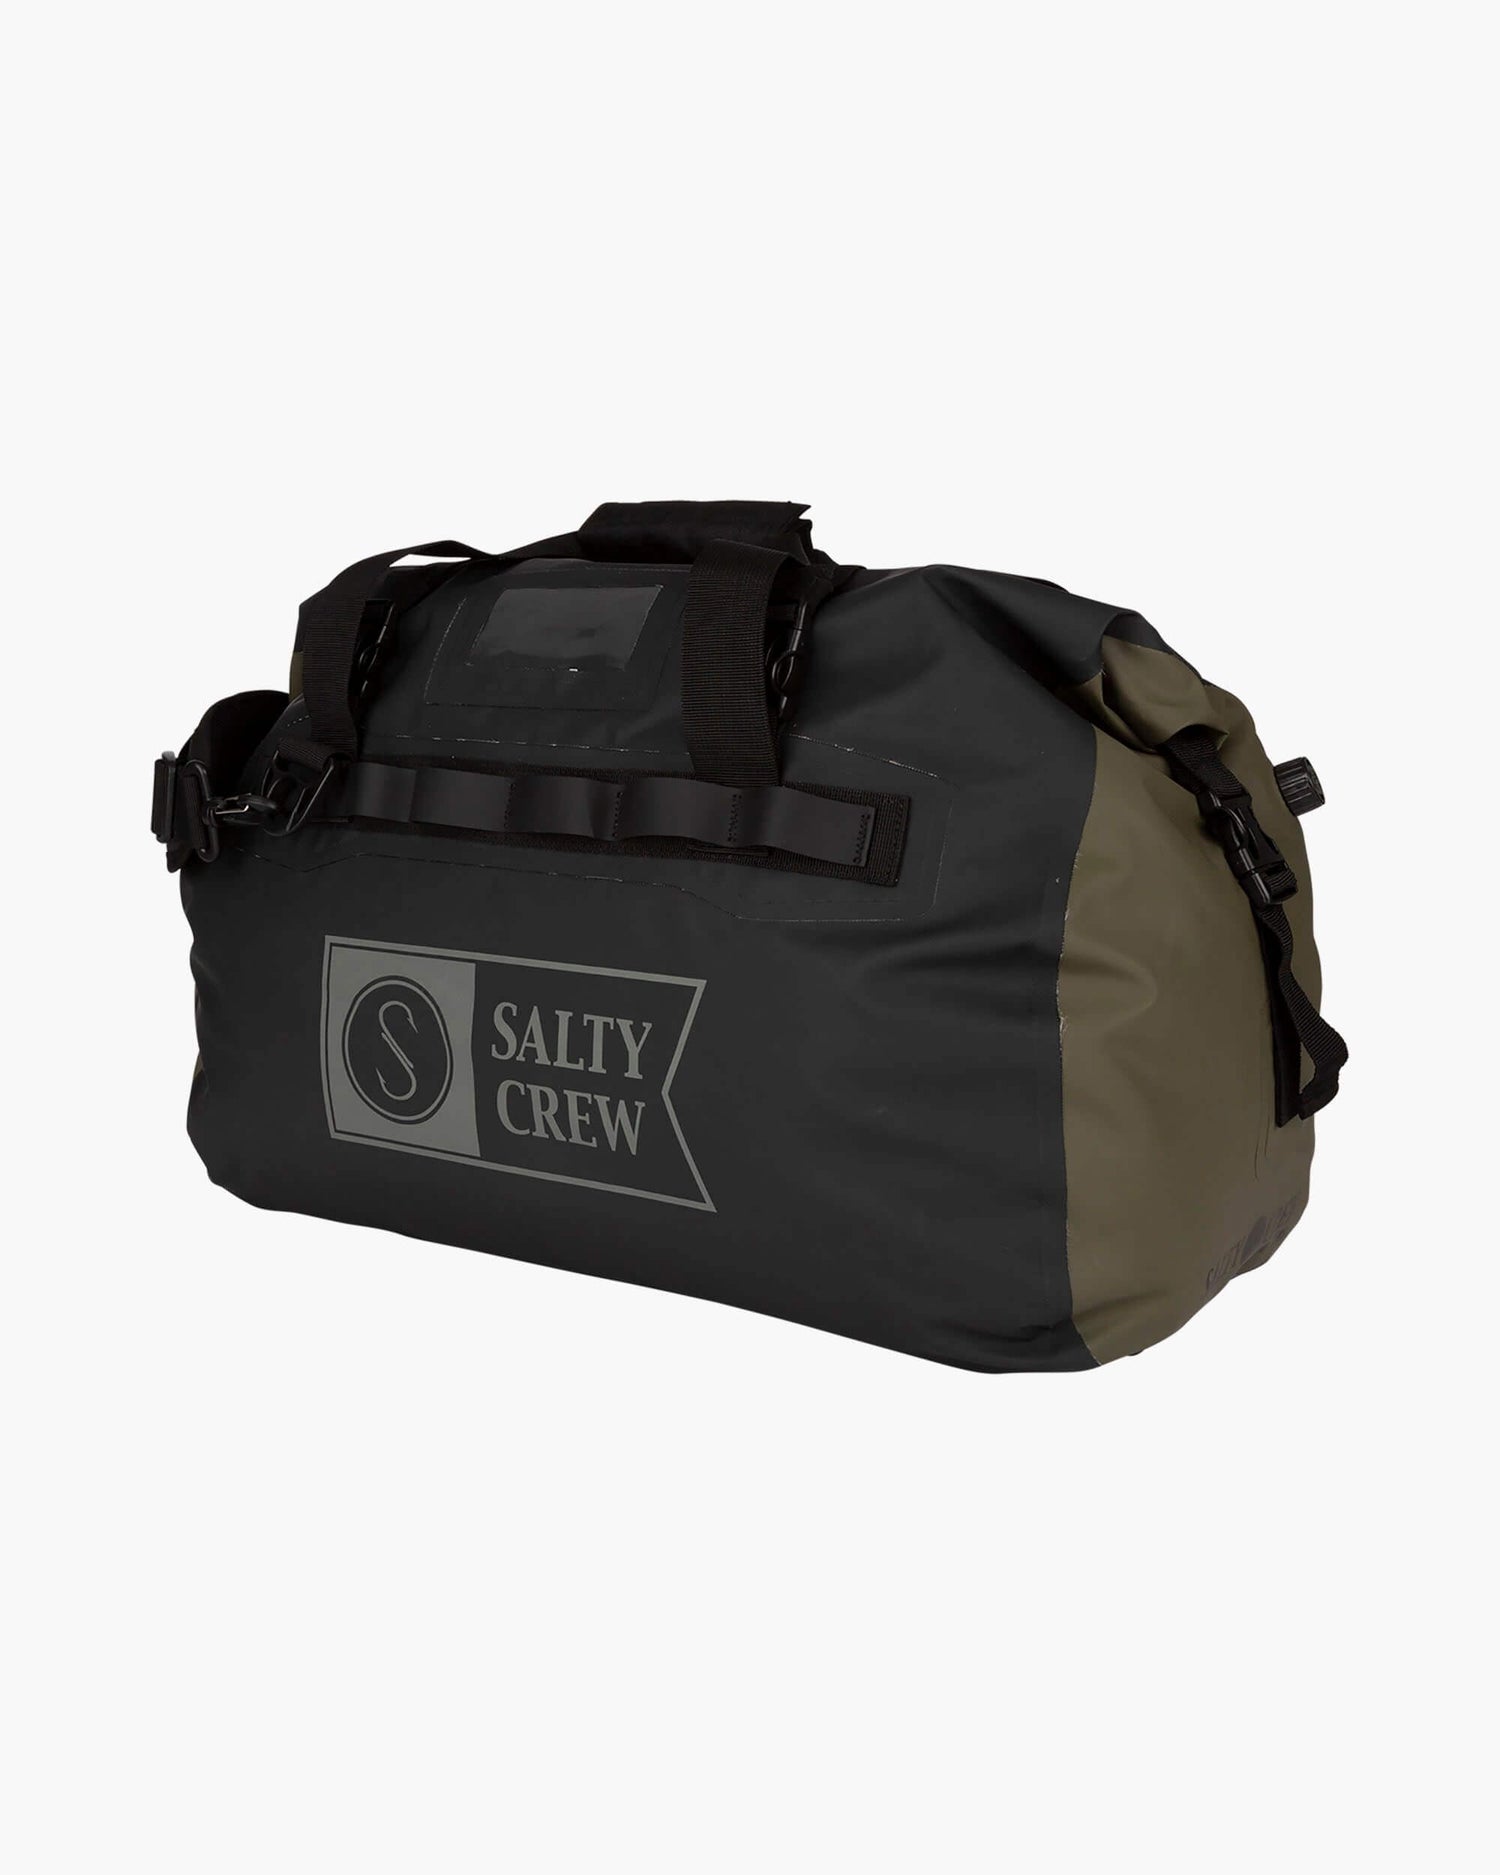 Voyager Black/Military Duffle Bag Salty Crew